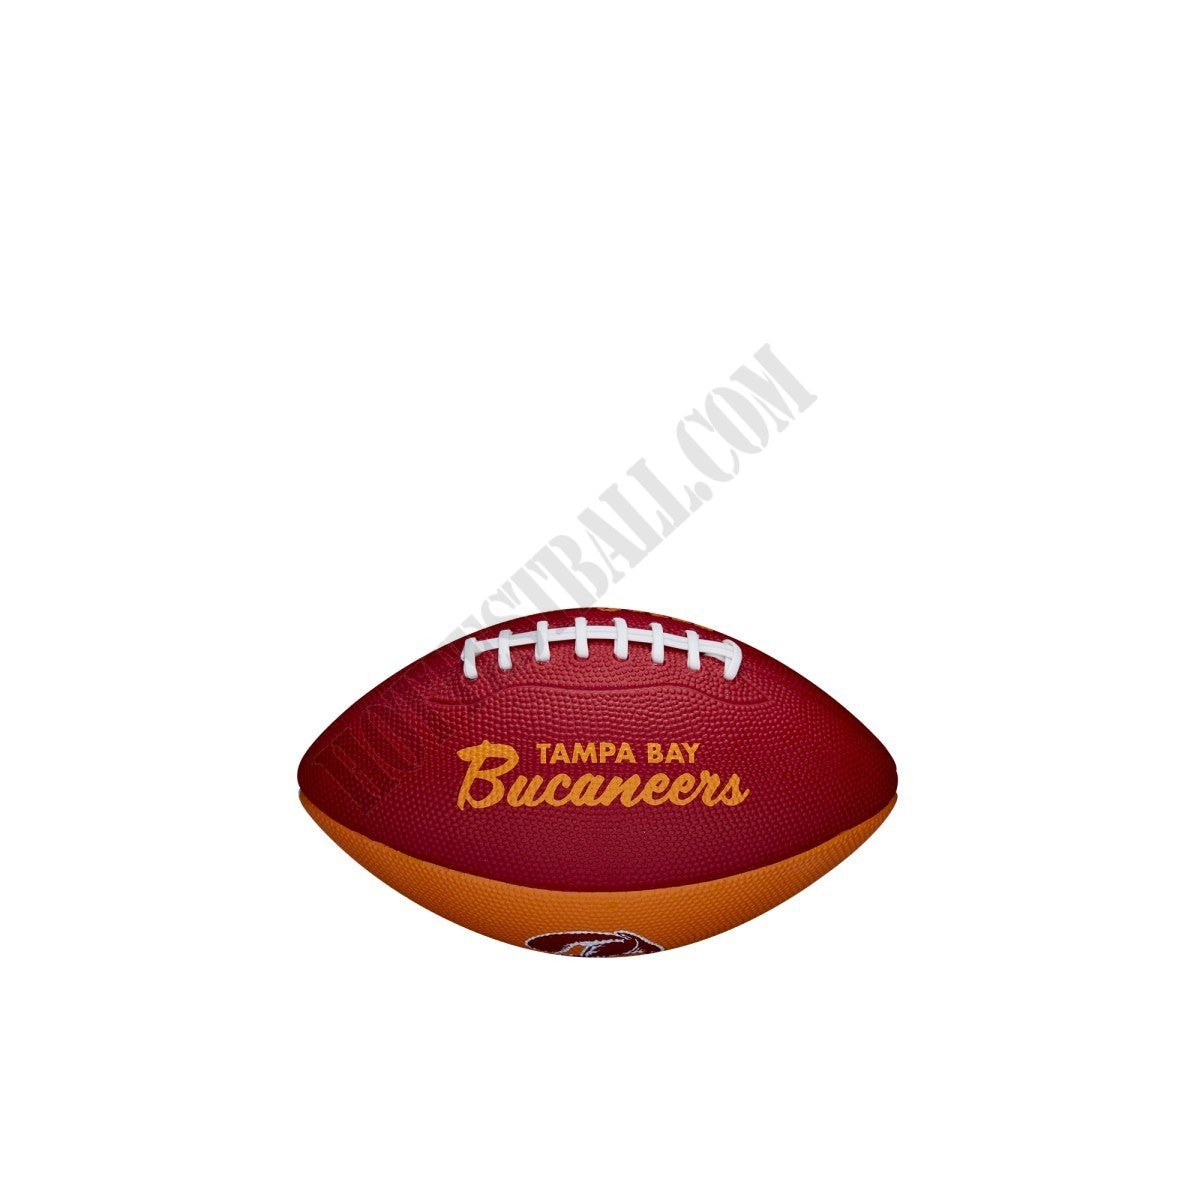 NFL Retro Mini Football - Tampa Bay Buccaneers ● Wilson Promotions - NFL Retro Mini Football - Tampa Bay Buccaneers ● Wilson Promotions